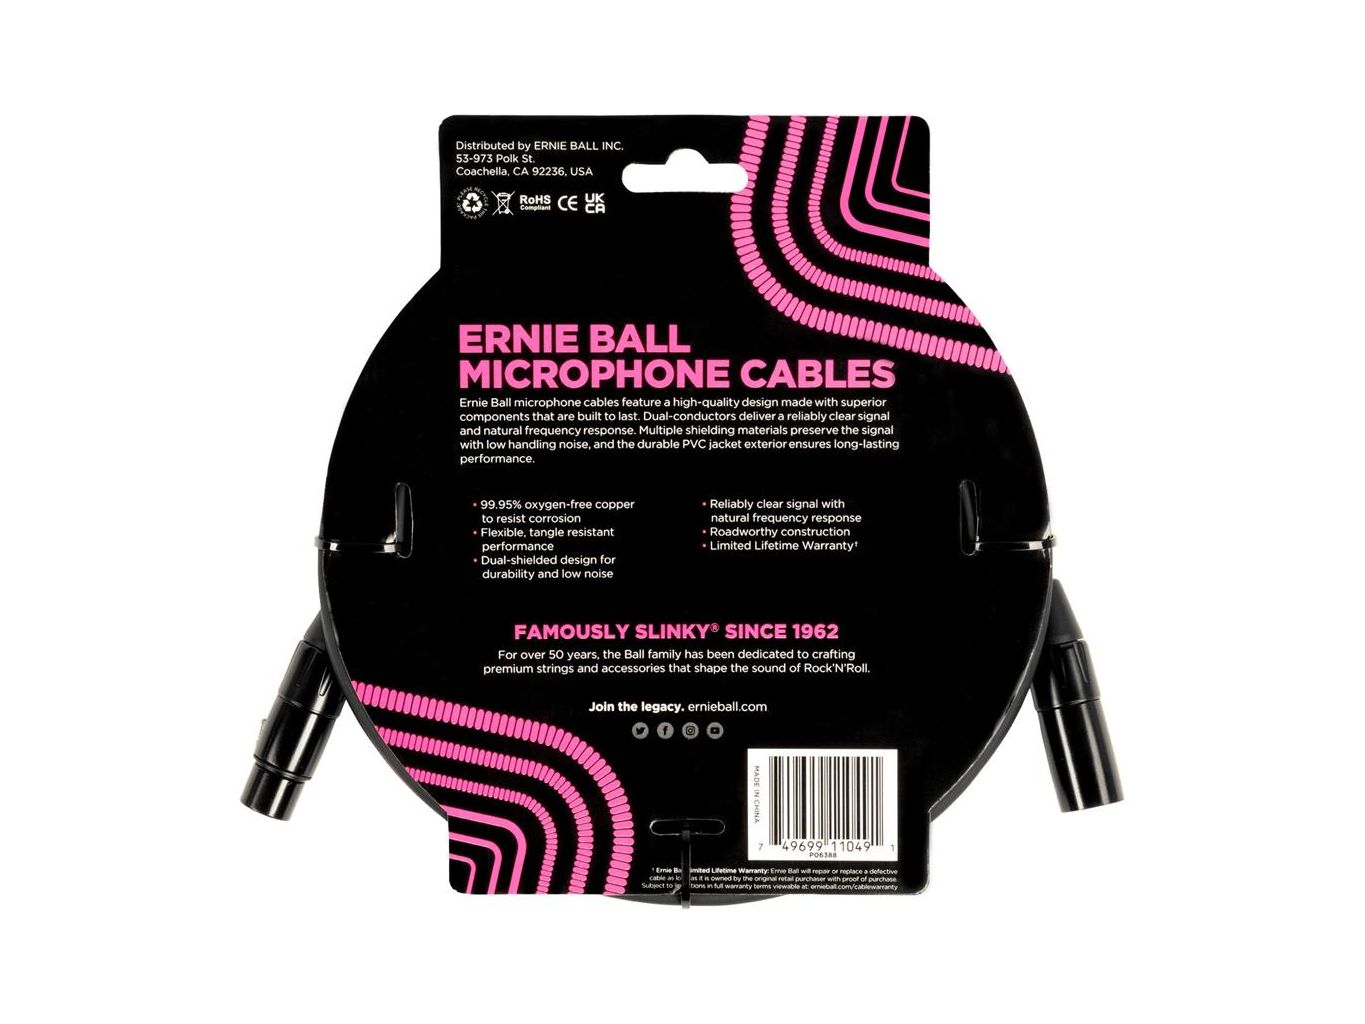 Ernie Ball 20ft XLR Microphone Cable in Black